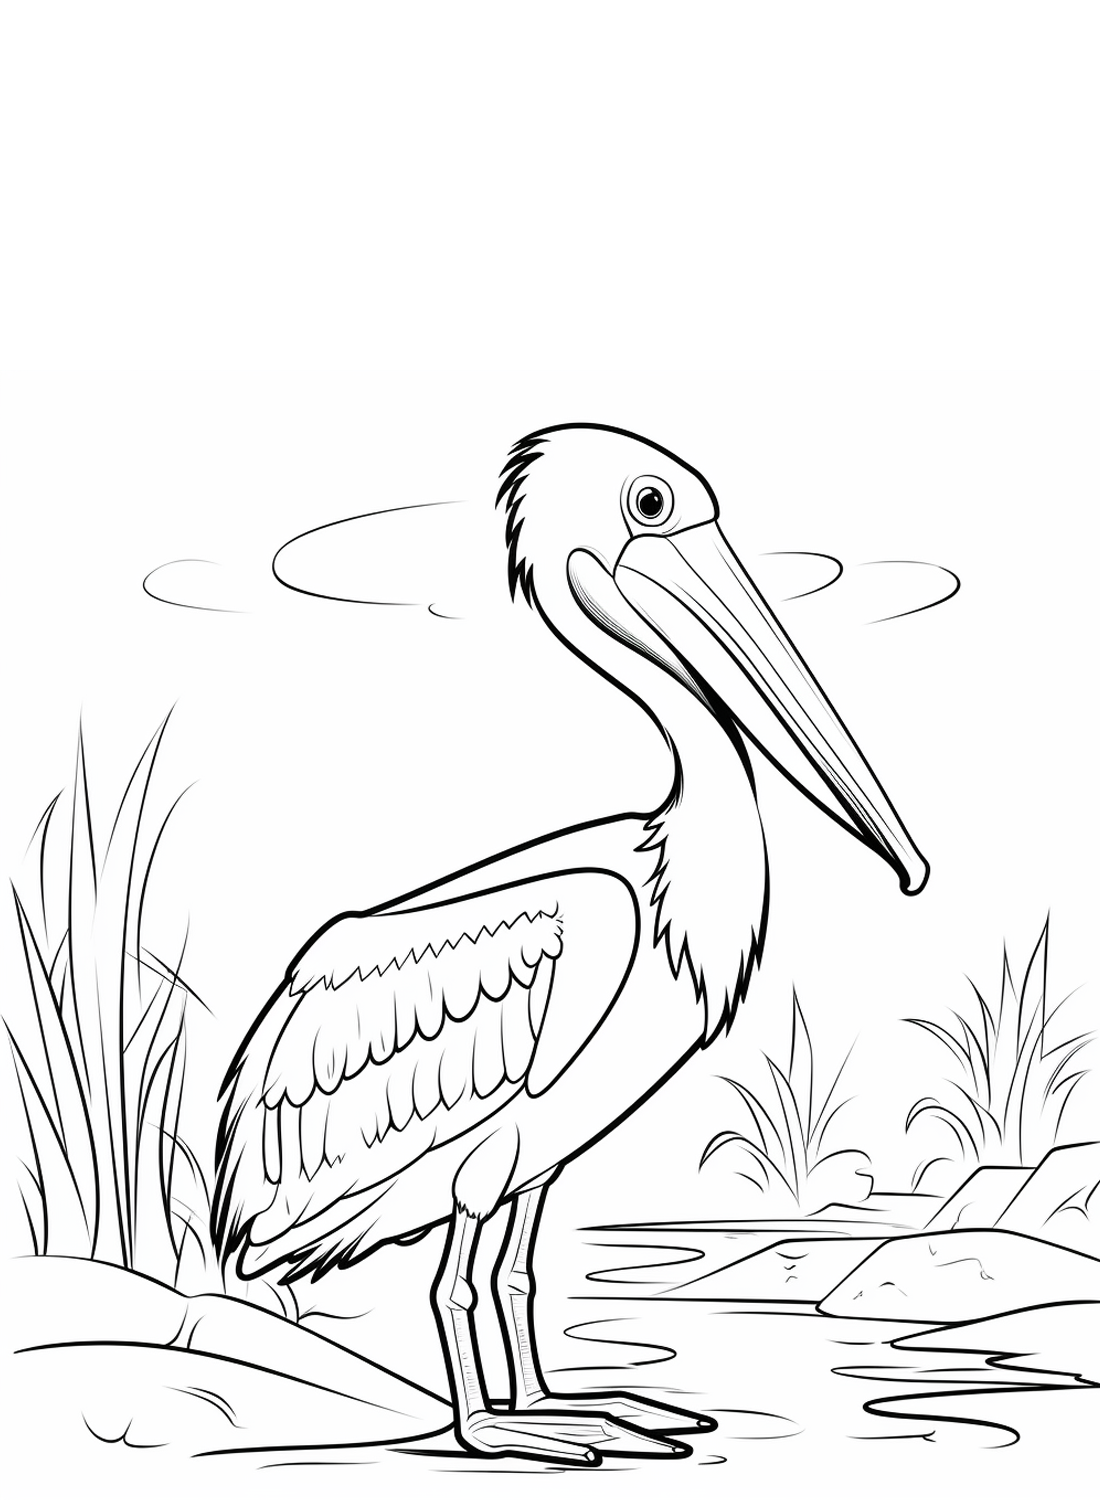 A cute pelican from Pelican